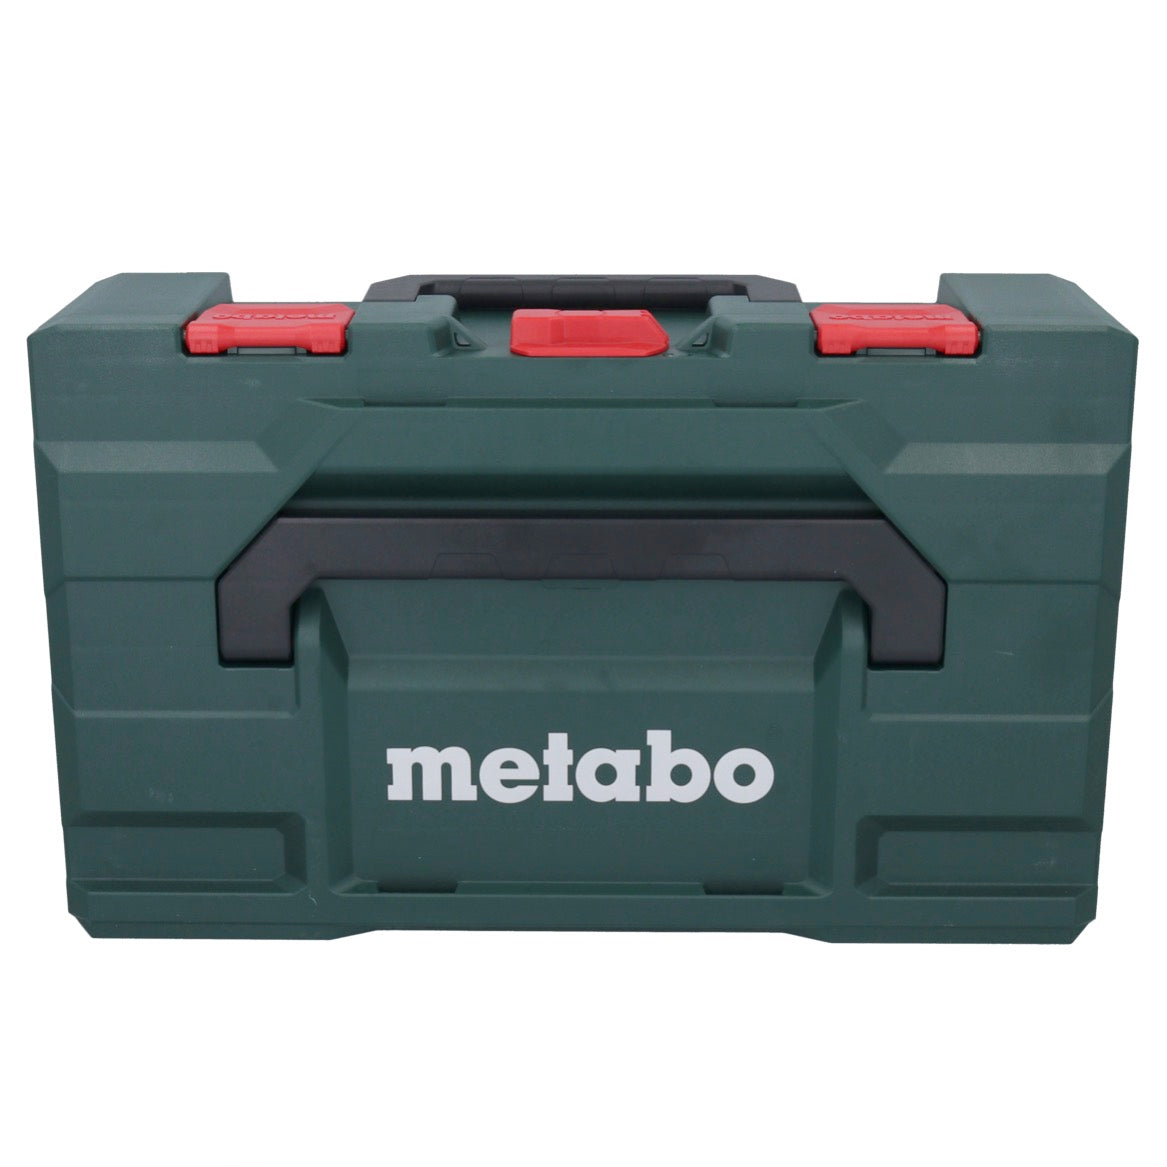 Metabo WPBA 18 LTX BL 15-125 Quick DS Akku Winkelschleifer 18 V 125 mm Brushless + 1x Akku 4,0 Ah + metaBOX - ohne Ladegerät - Toolbrothers